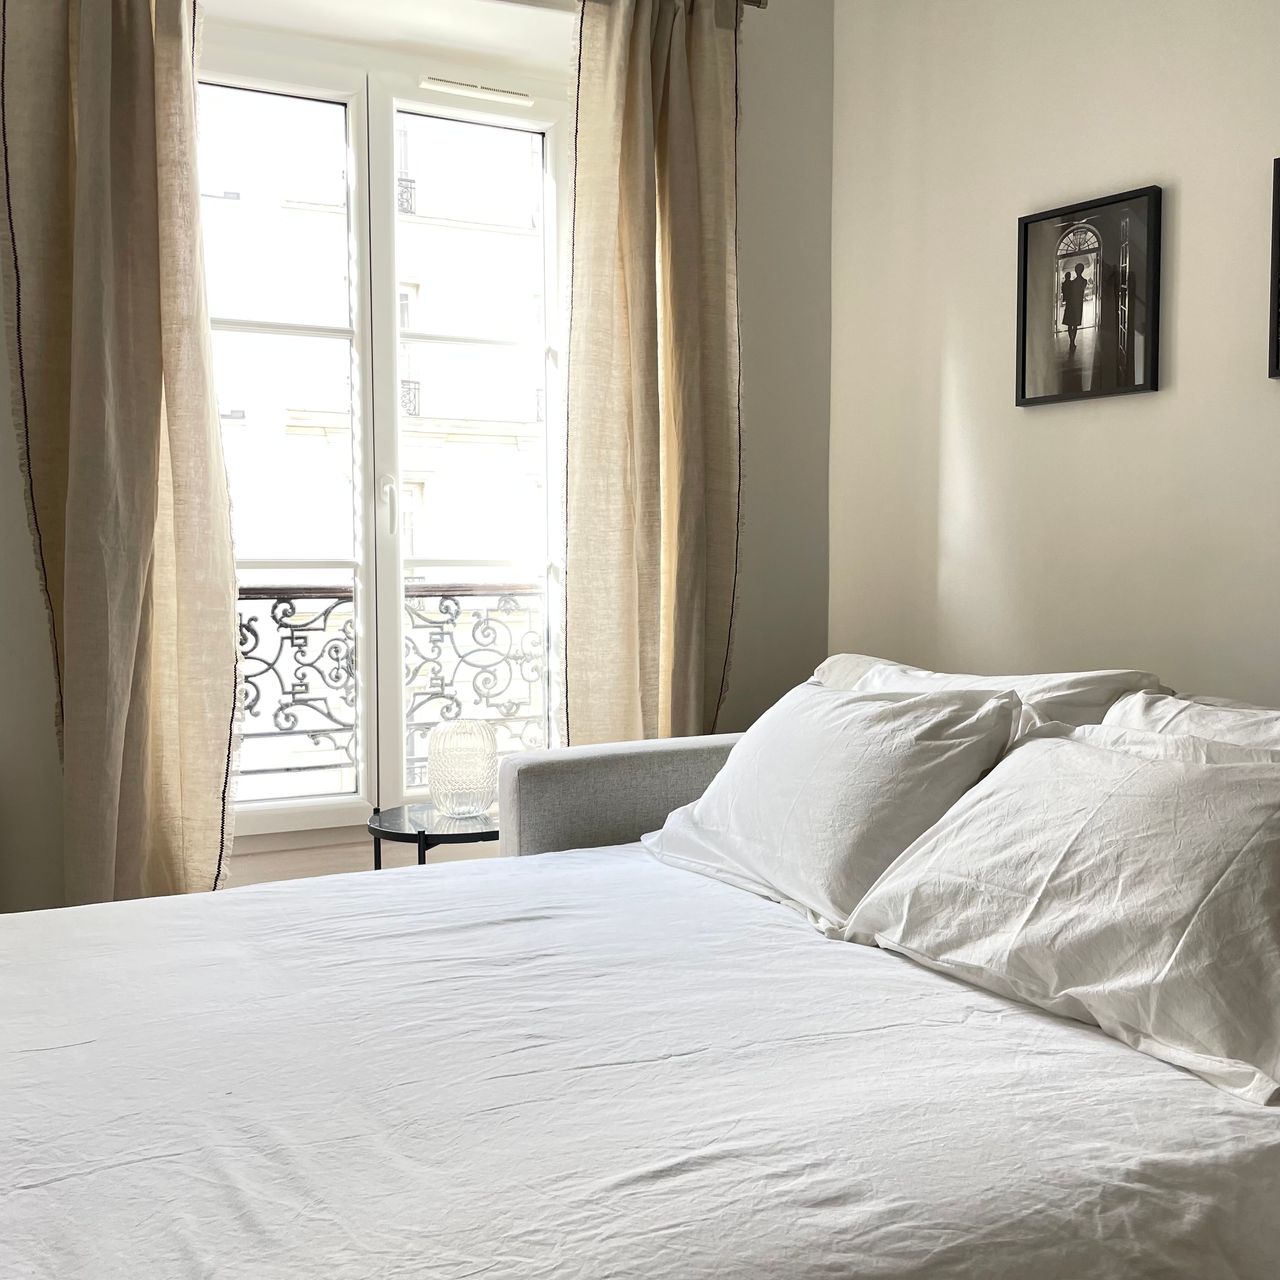 Elegant & Cozy 3BR Parisian appartement